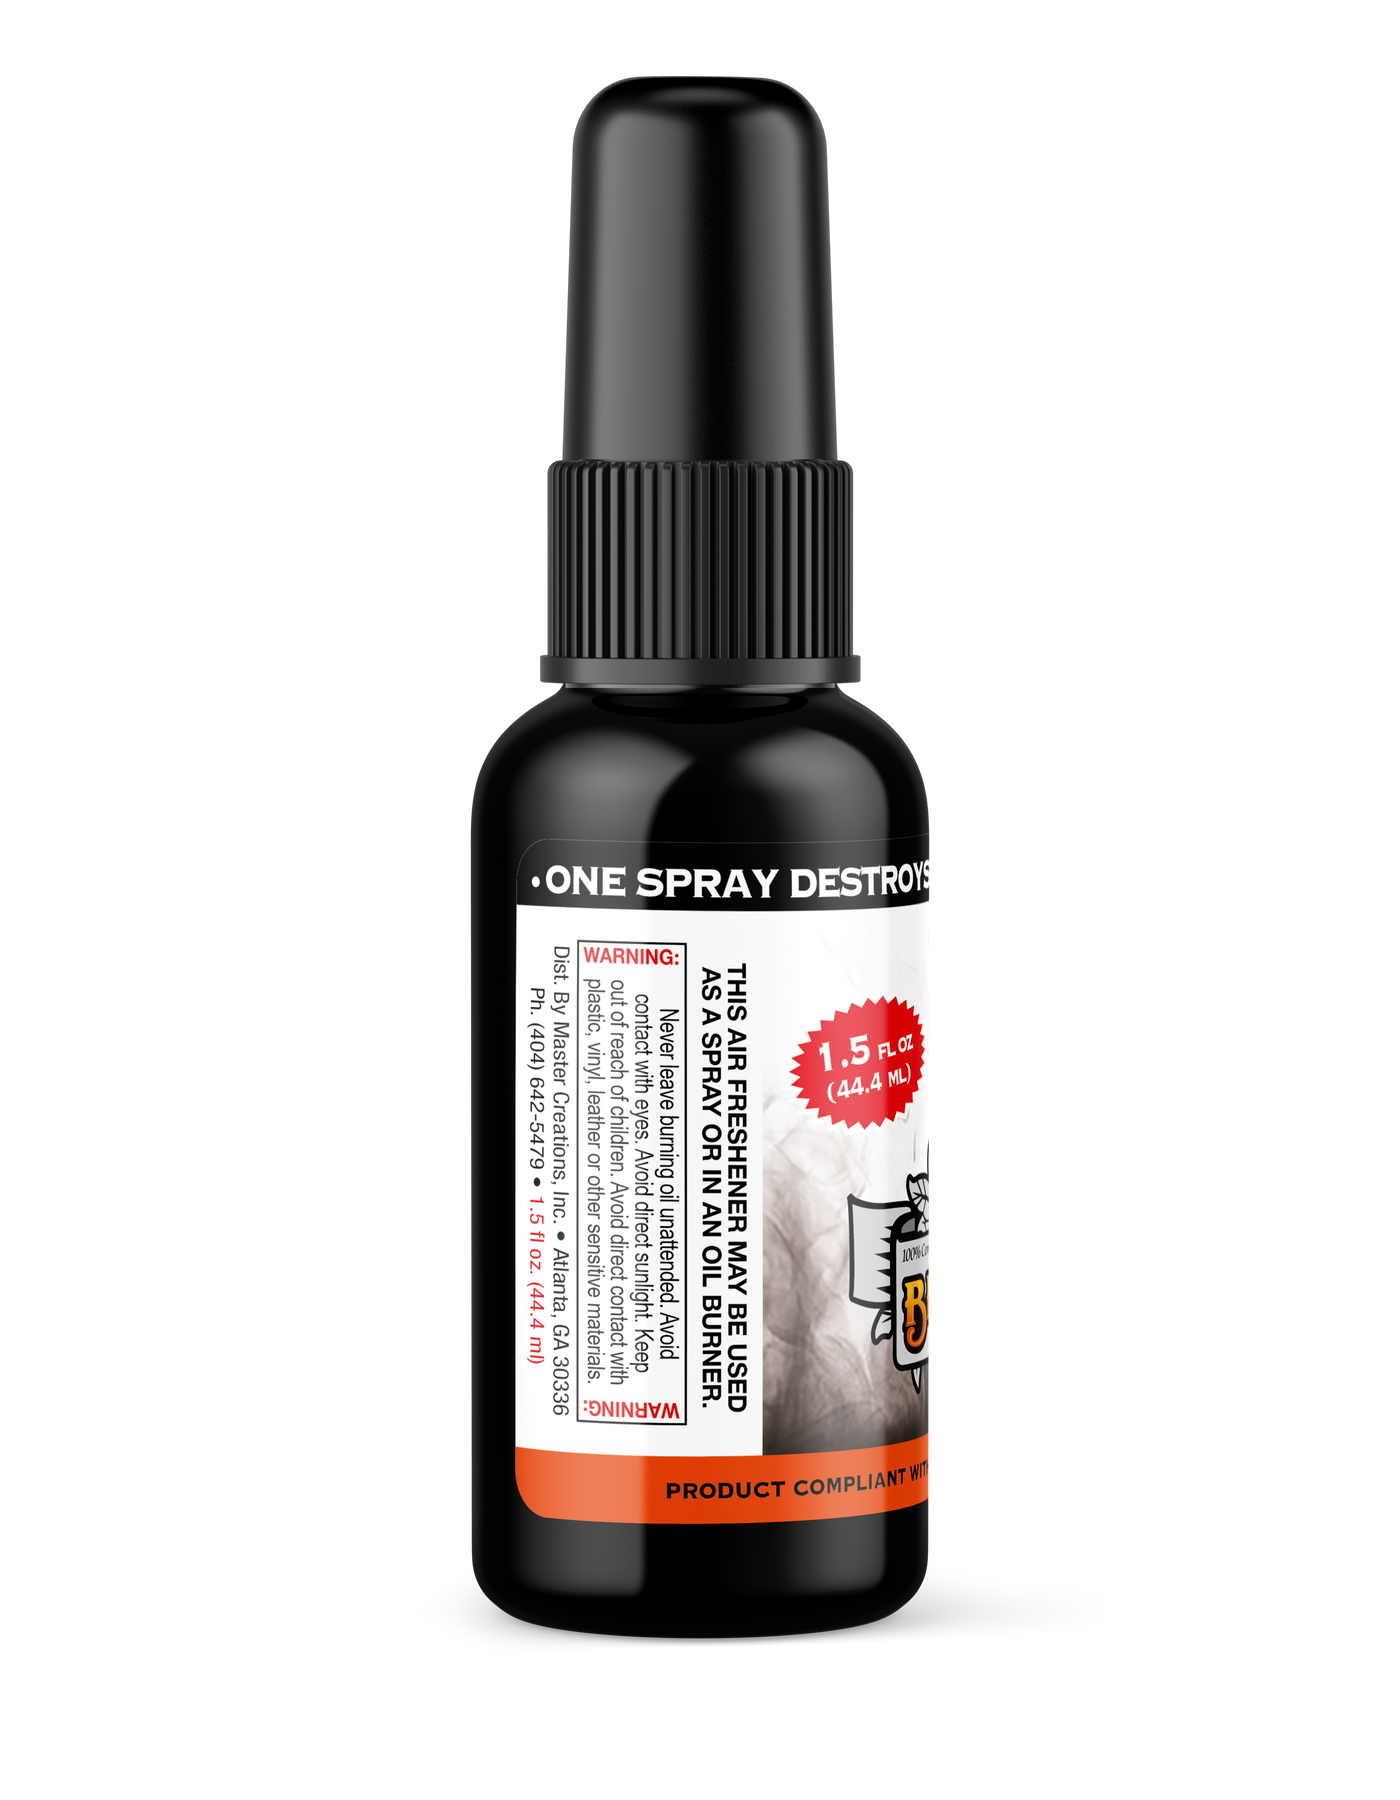 Black Rain Odor Eliminator Spray